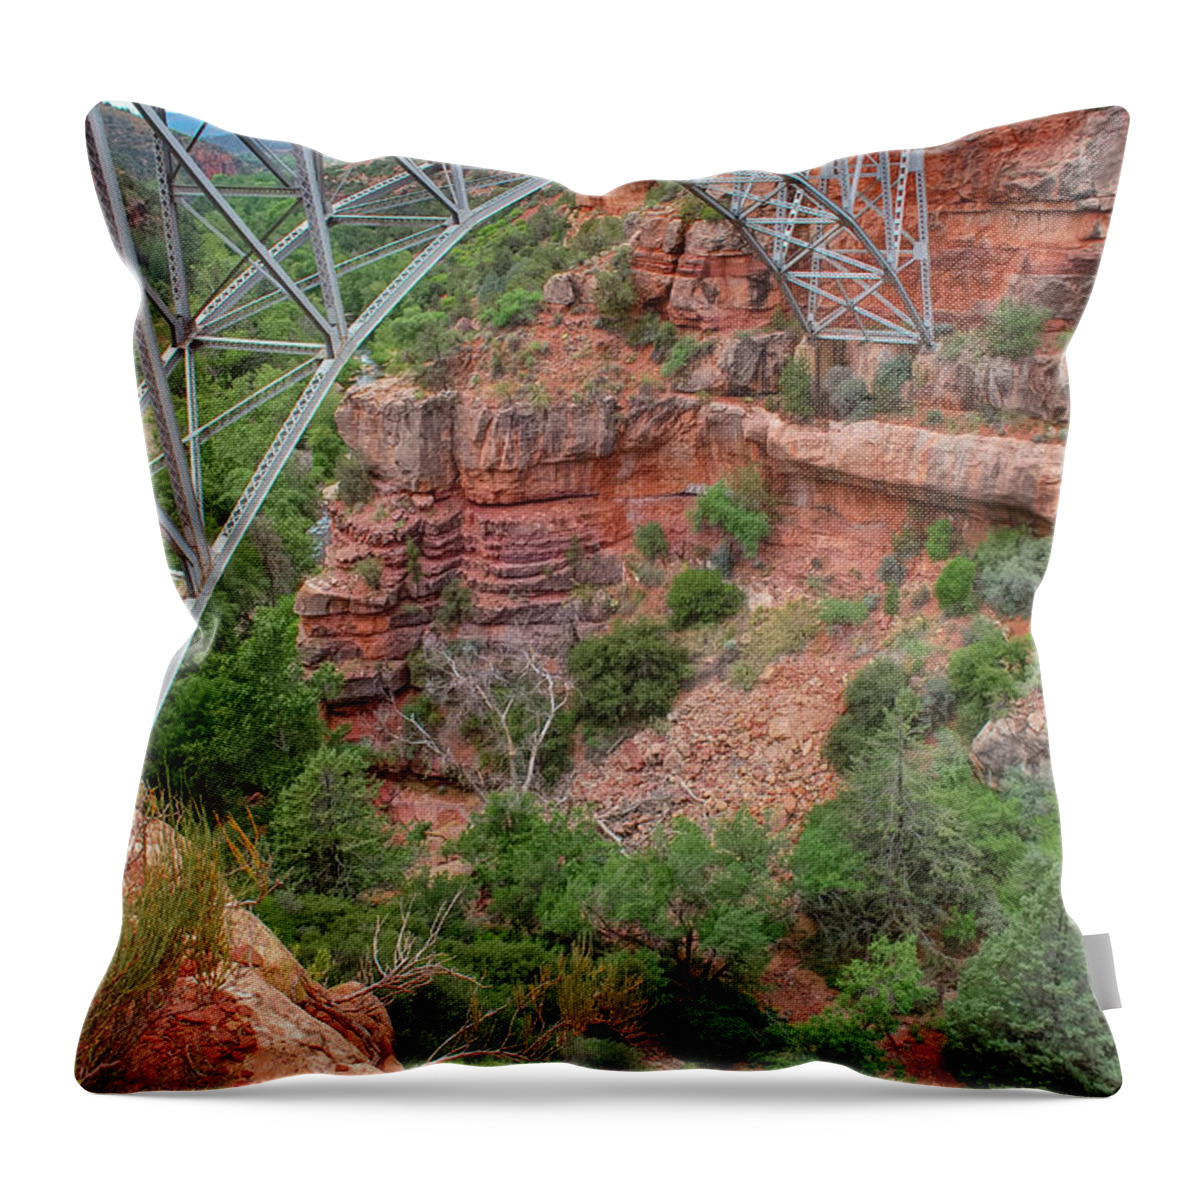 Sedona Arizona Throw Pillow featuring the photograph Midgley Bridge - Oak Creek Canyon in Sedona Arizona by Gregory Ballos